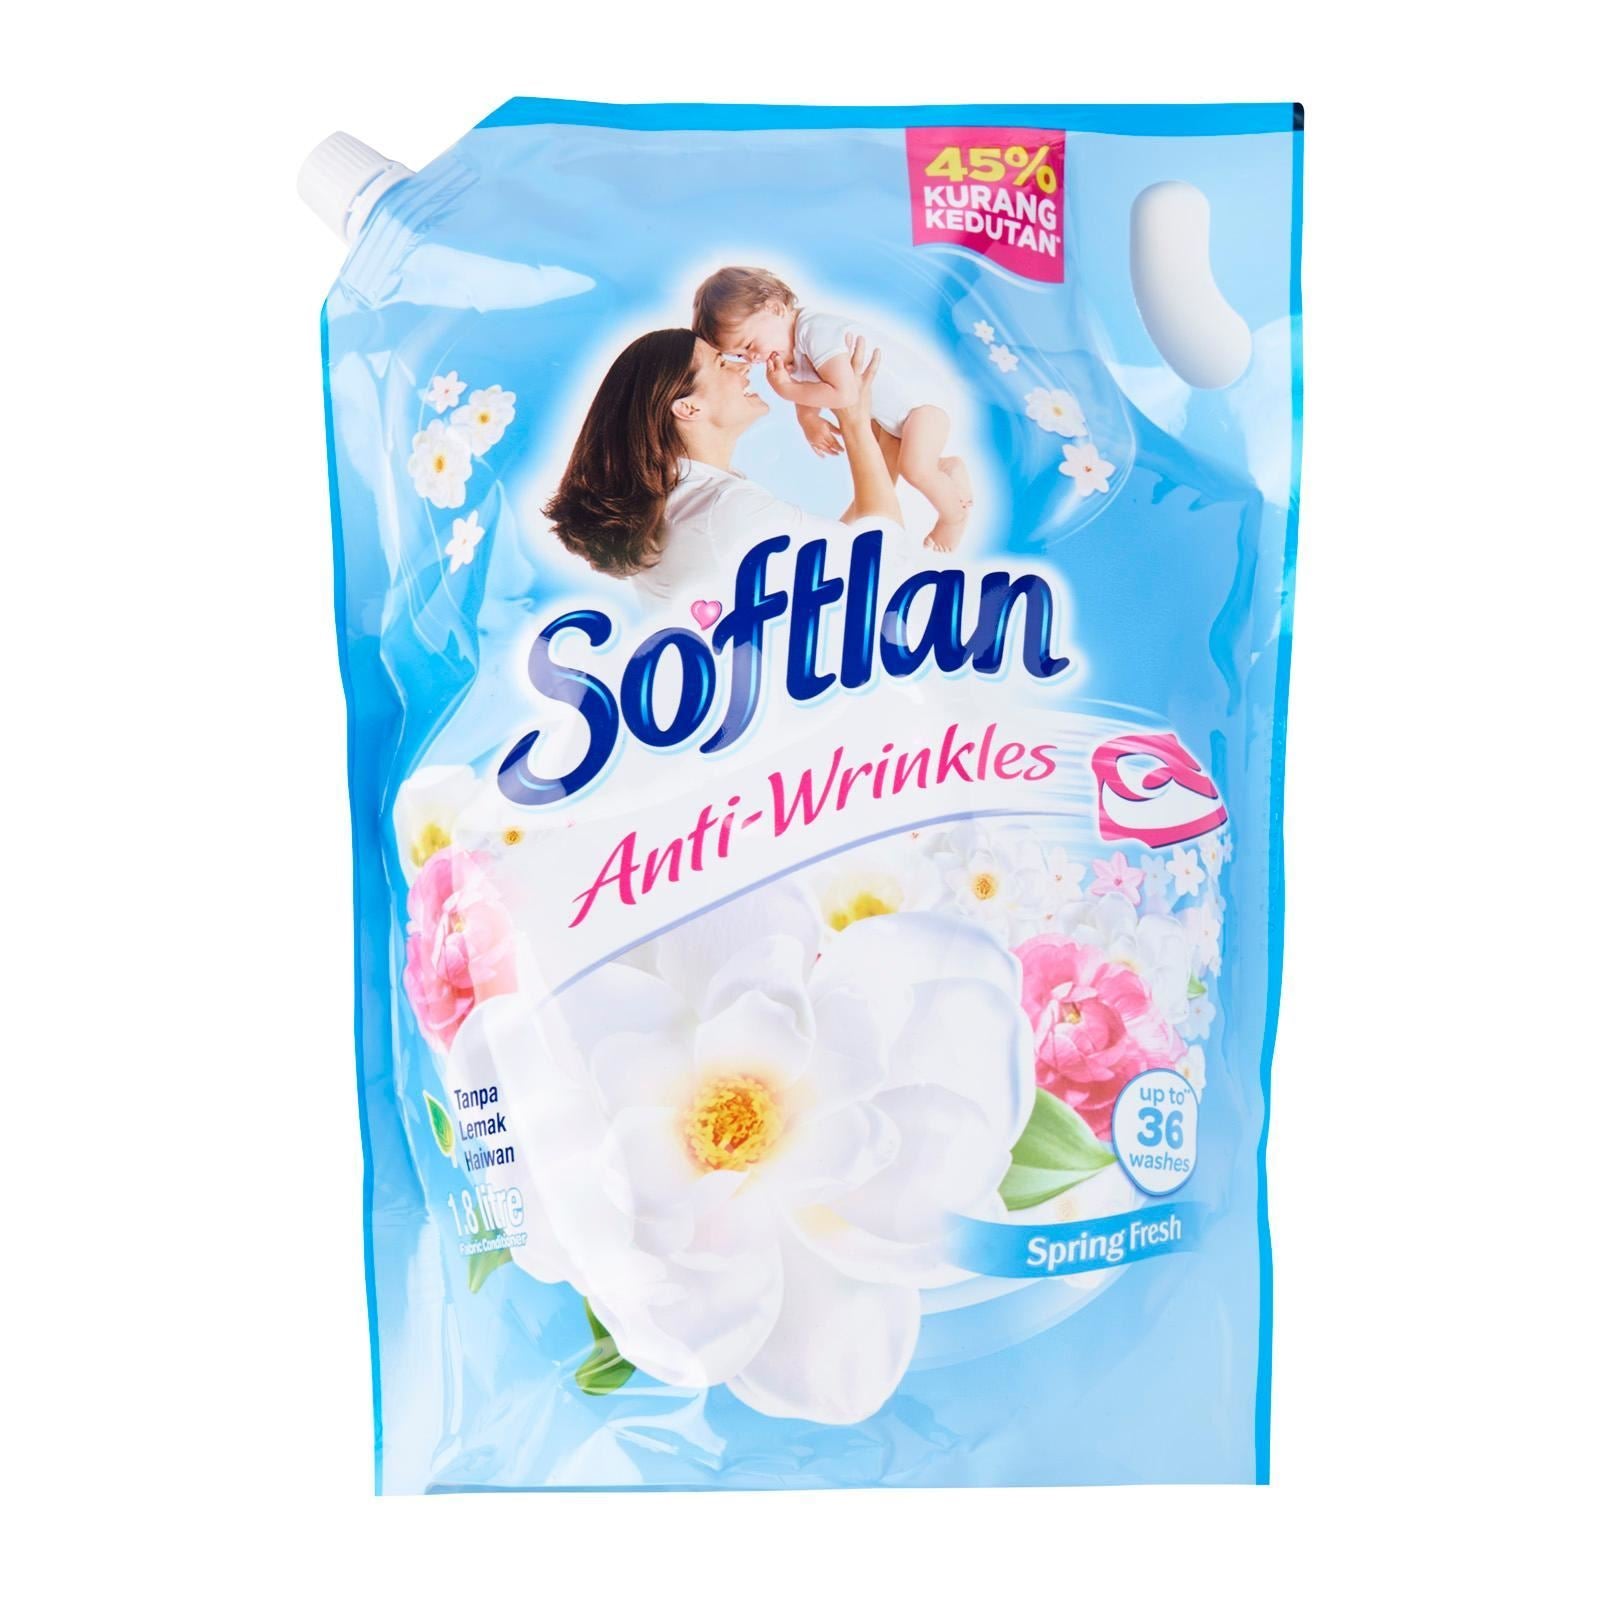 Softlan Anti Wrinkles Spring Fresh Fabric Conditioner